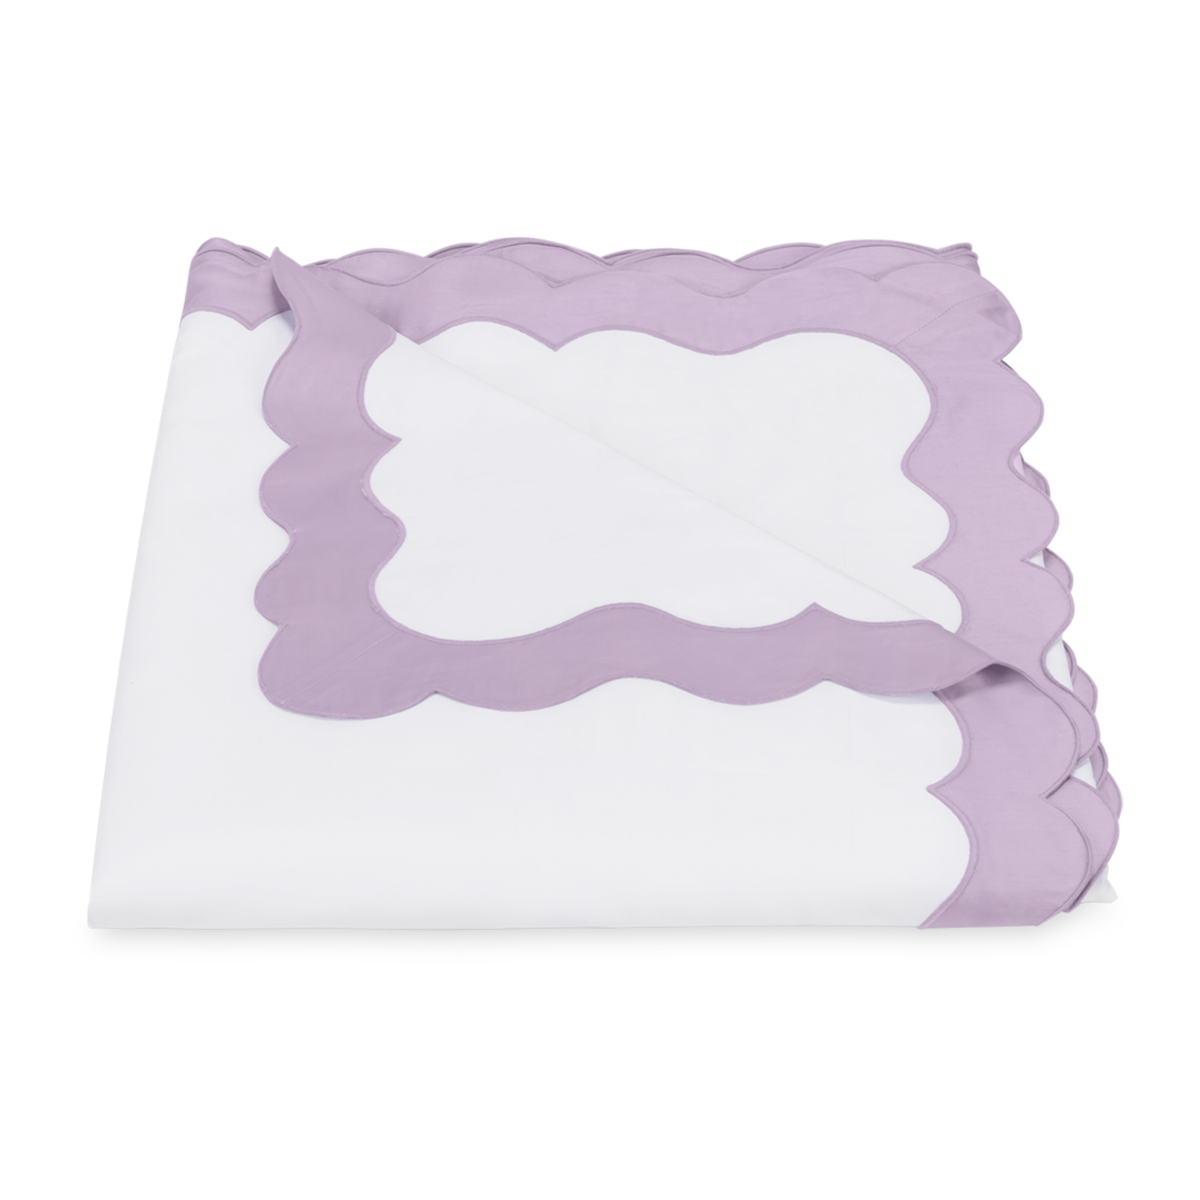 Folded Duvet Cover of Matouk Lorelei Bedding in Violet Color